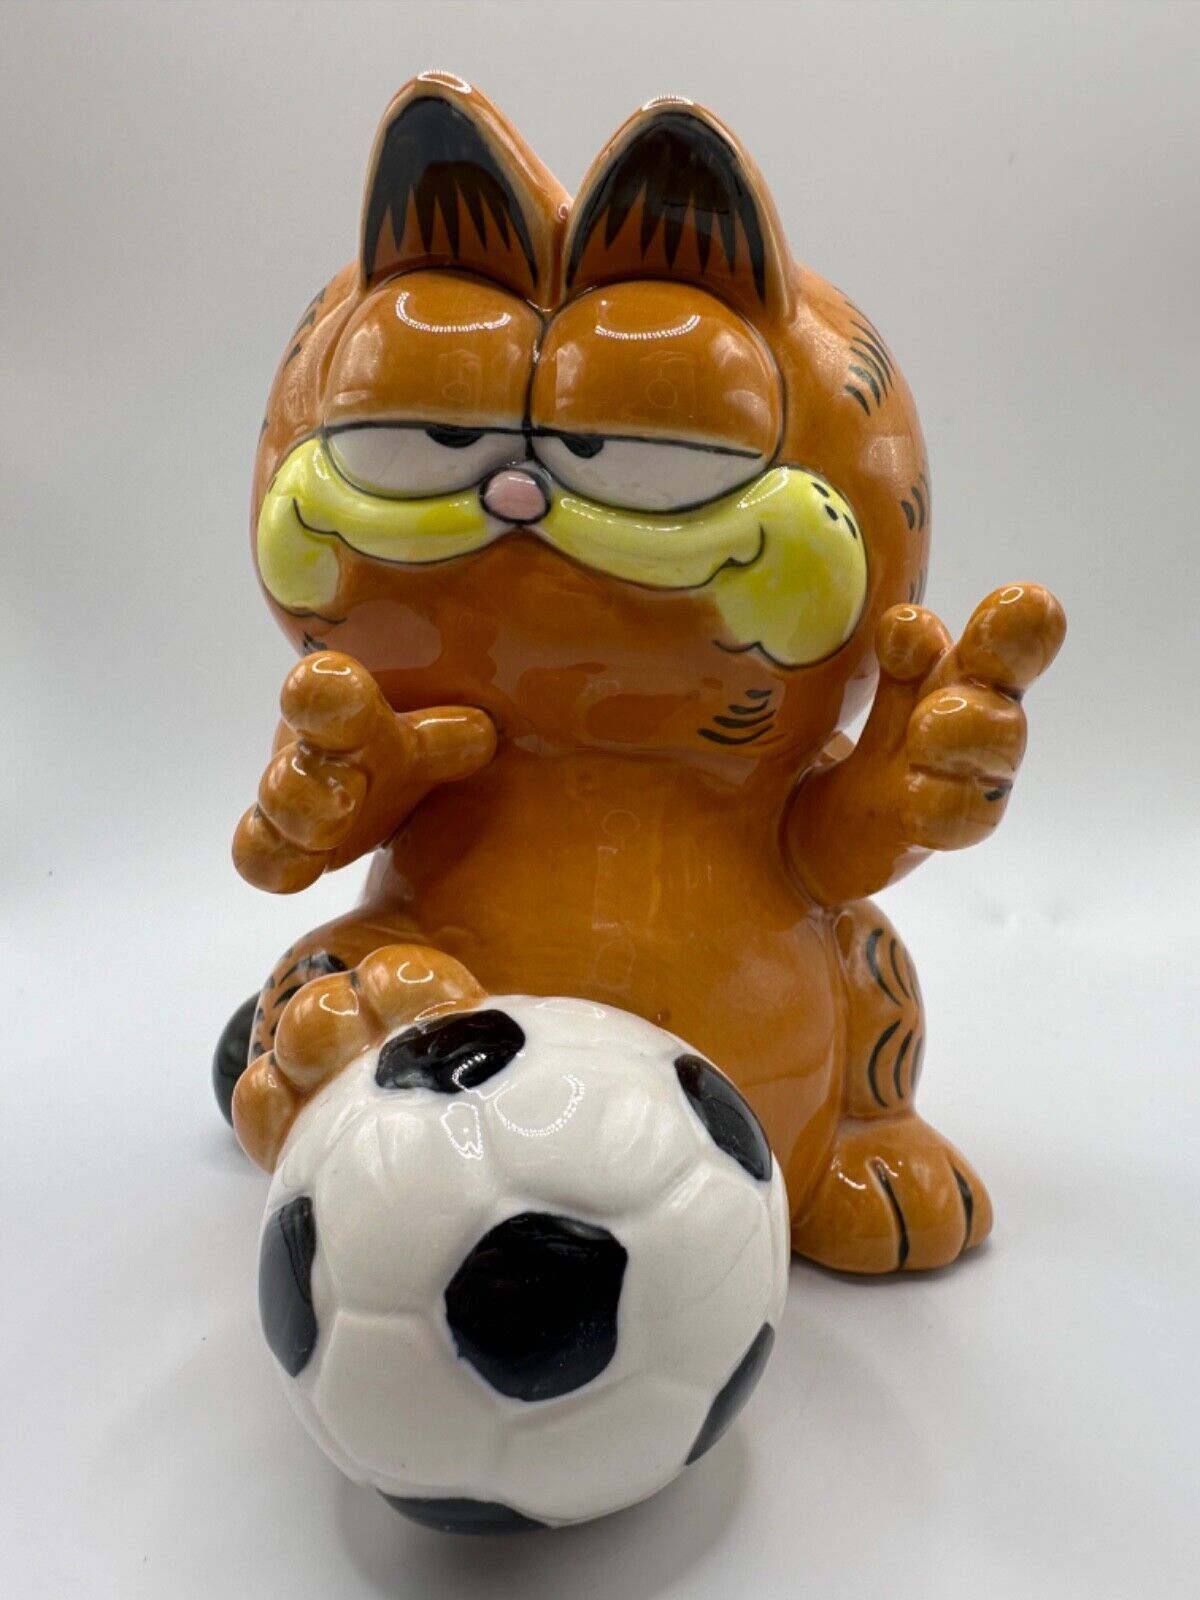 Garfield The Cat Bank Figurine Enesco Jim Davis Soccer Cat Korea 1981 5.5”